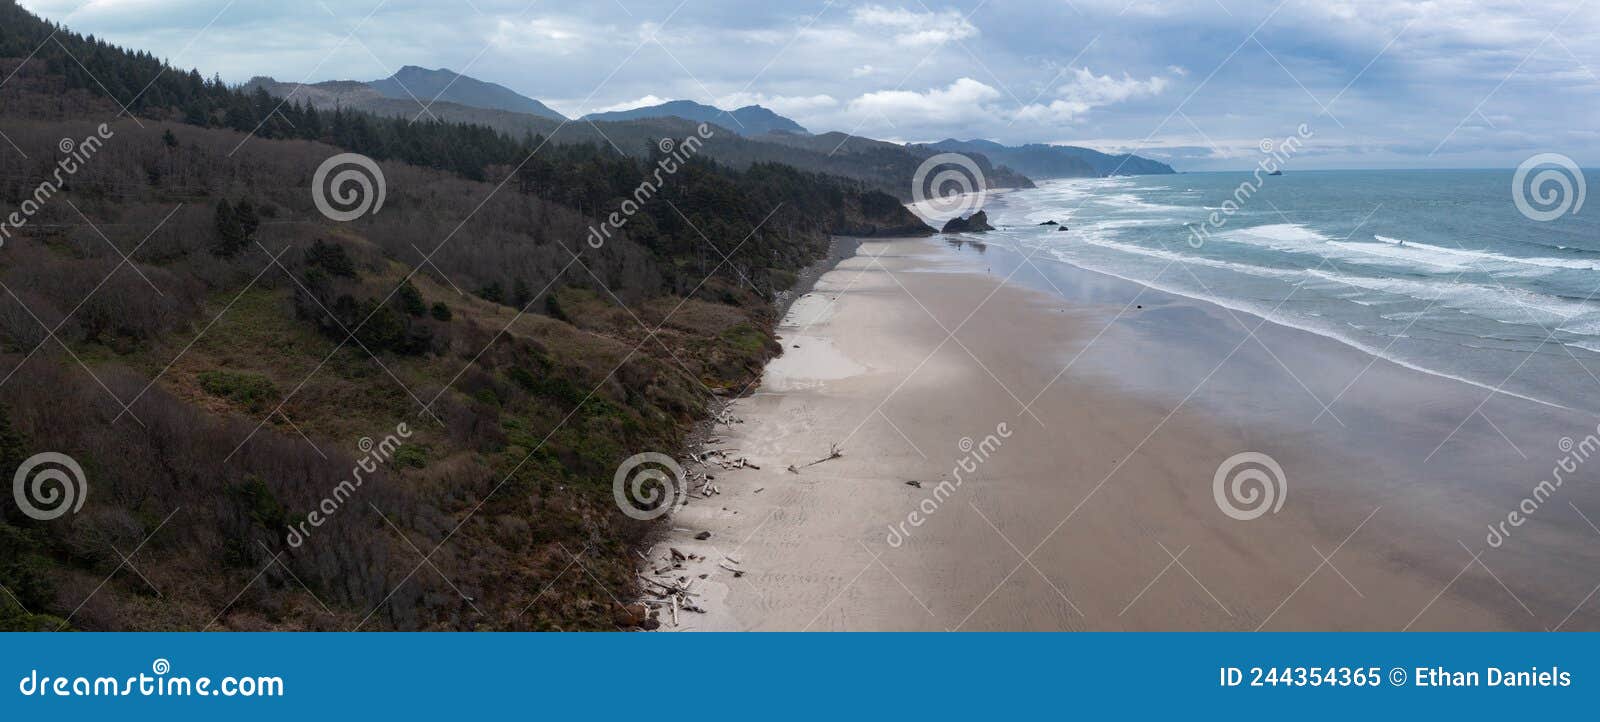 aerial view of scenic oregon beach